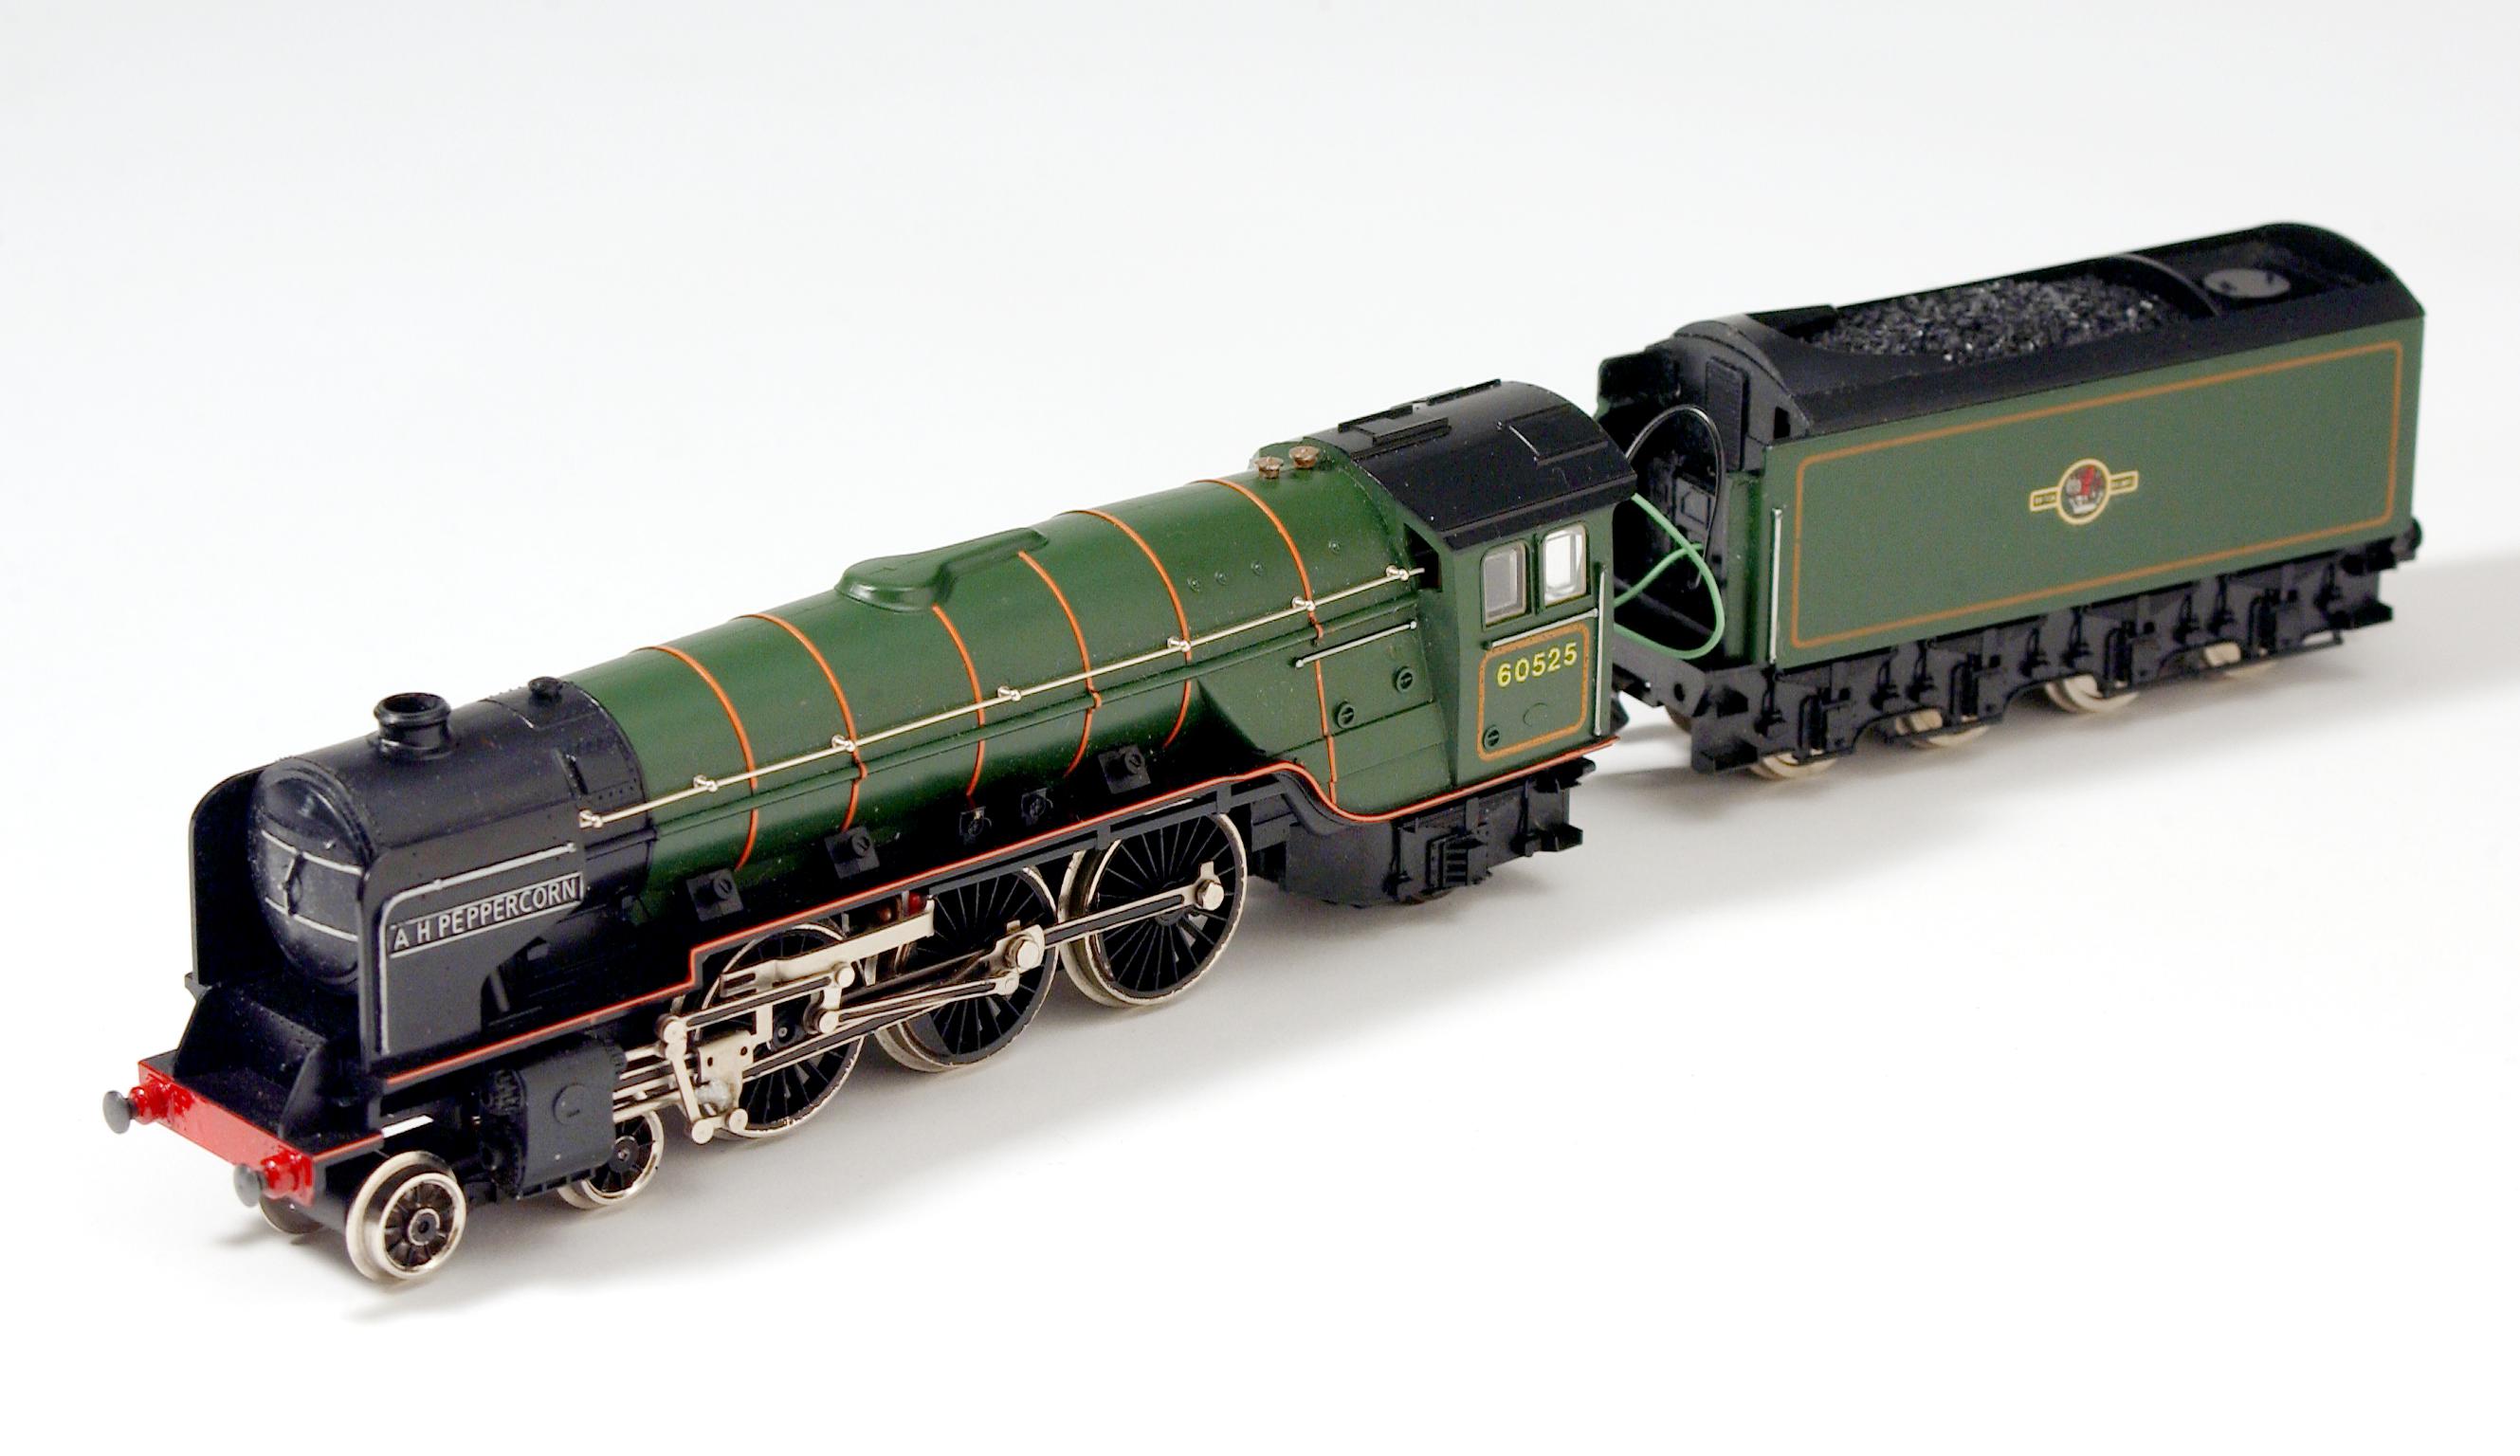 Trix locomotive model 'A.H. PEPPERCORN'